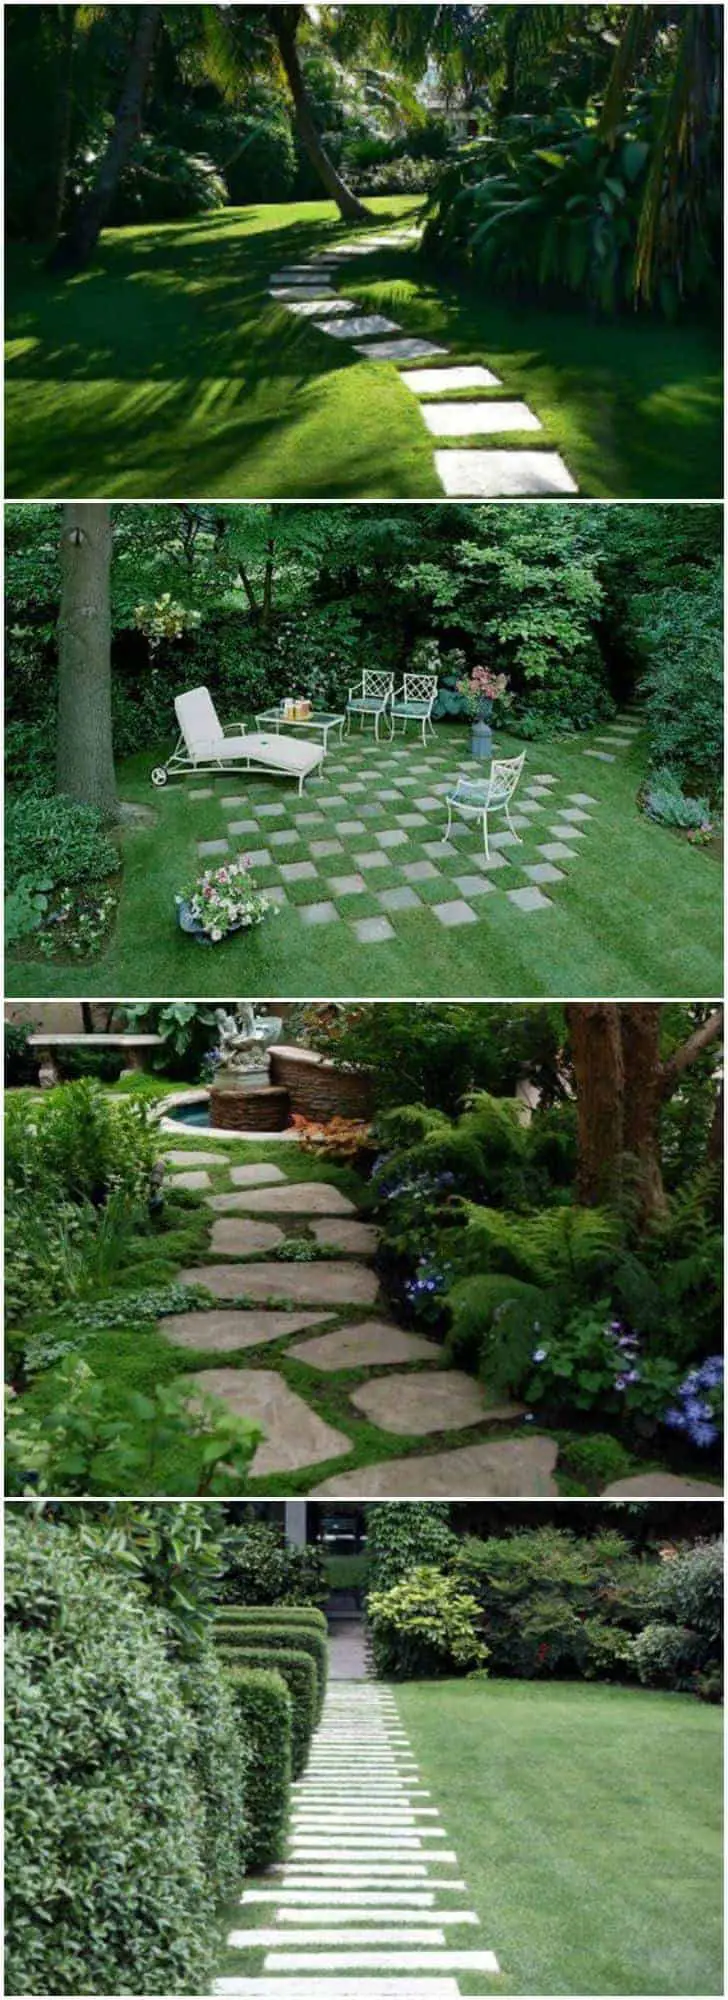 11 Amazing Lawn Landscaping Design Ideas - Decor - 1001 ...